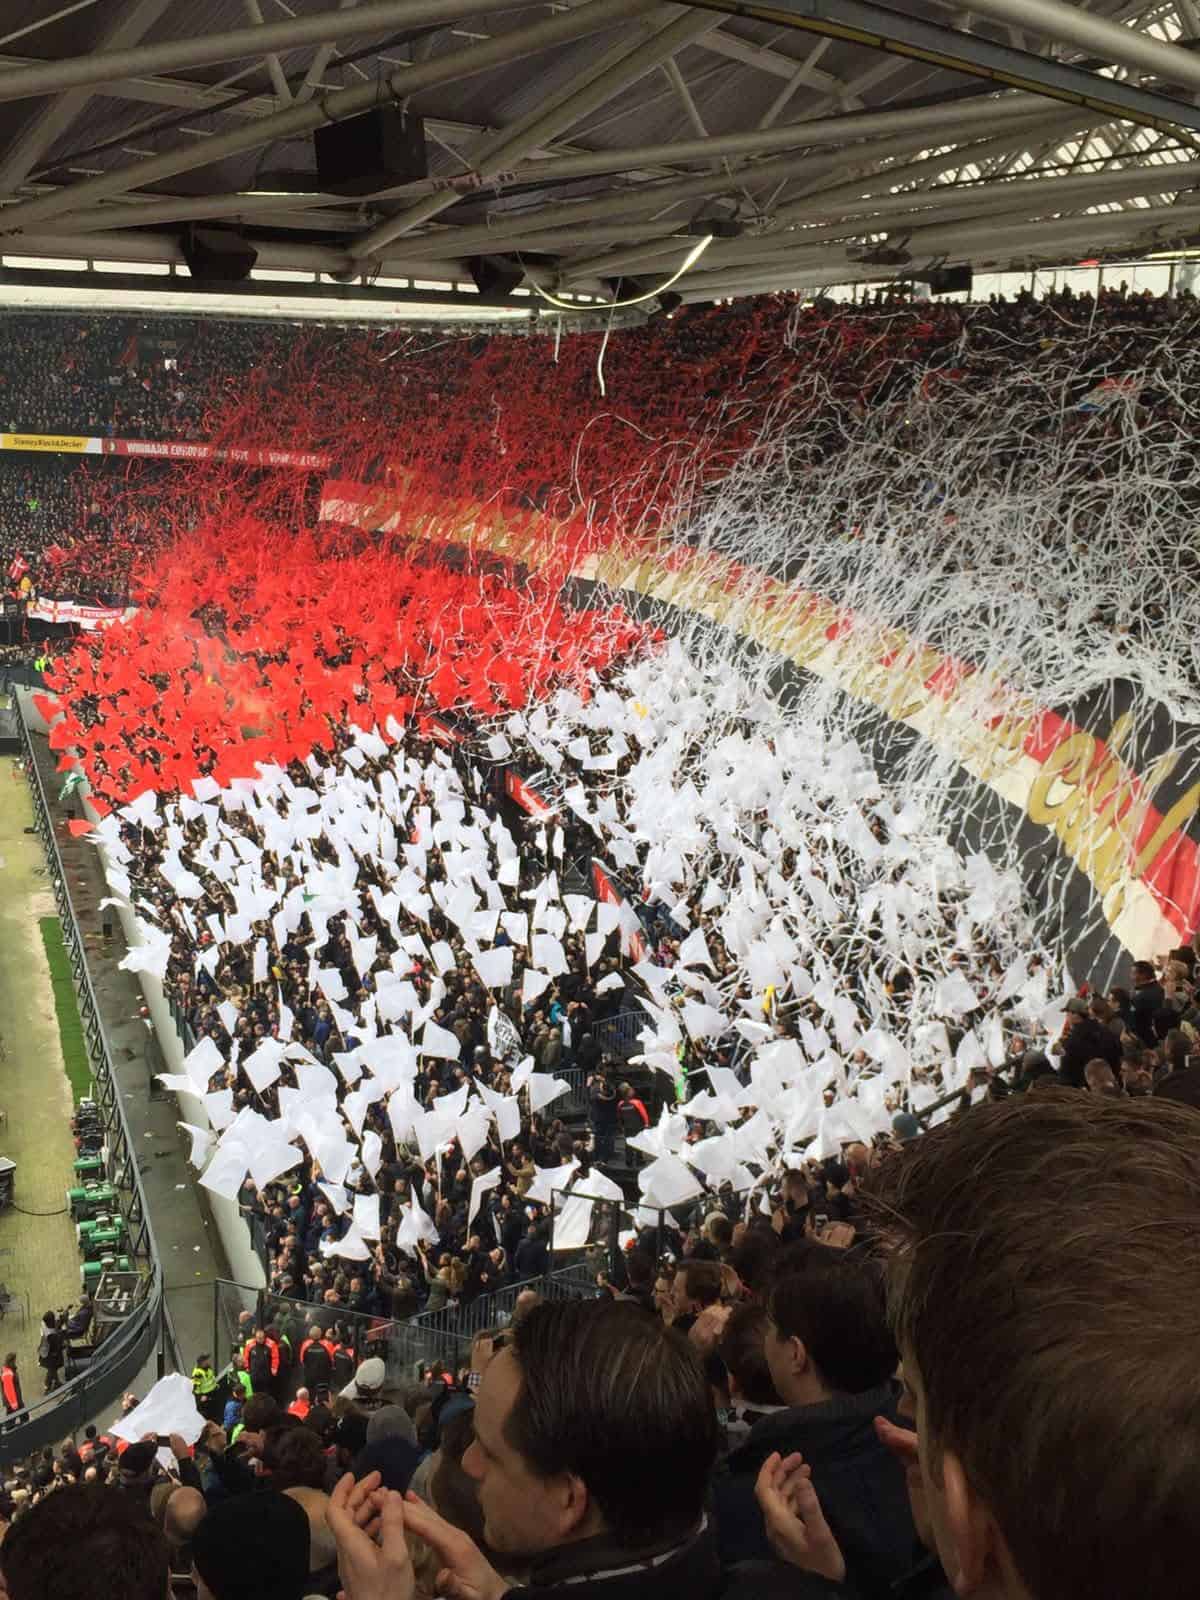 Sfeeractie Feyenoord - PSV